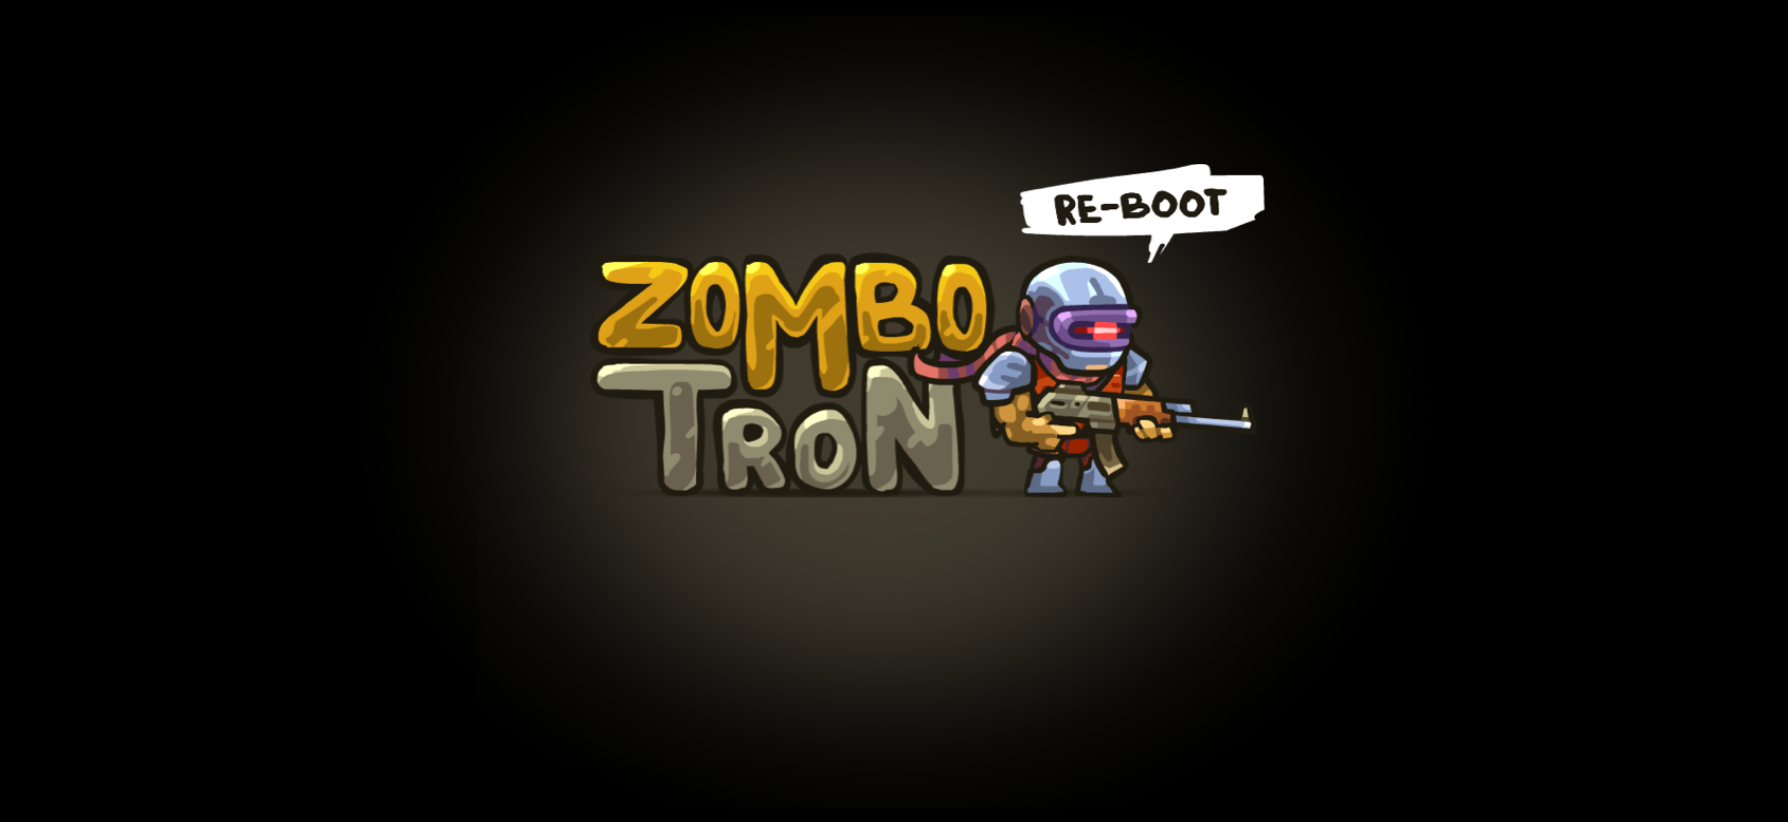 Zombotron Re-Boot